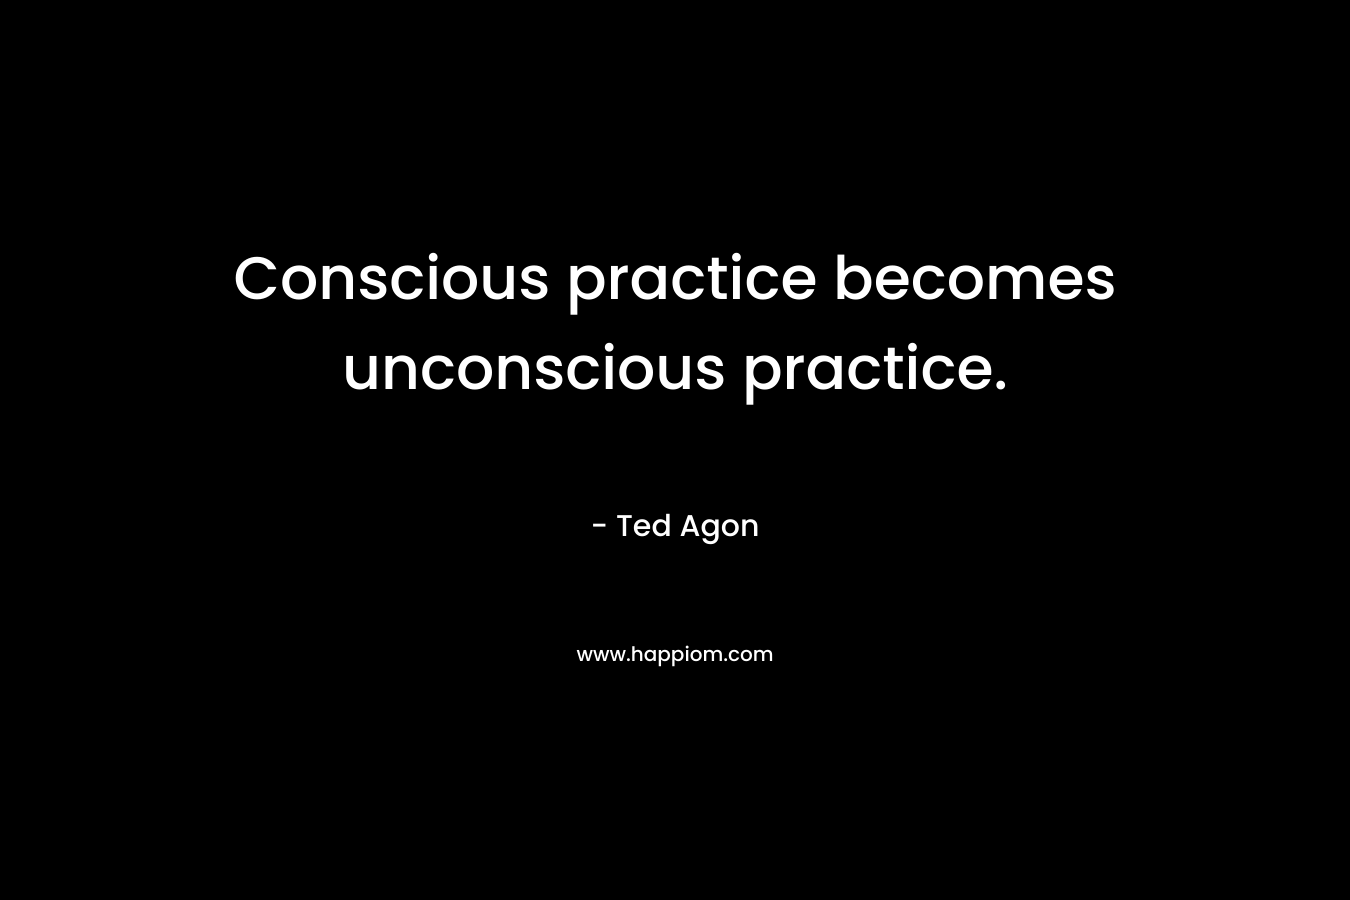 Conscious practice becomes unconscious practice.